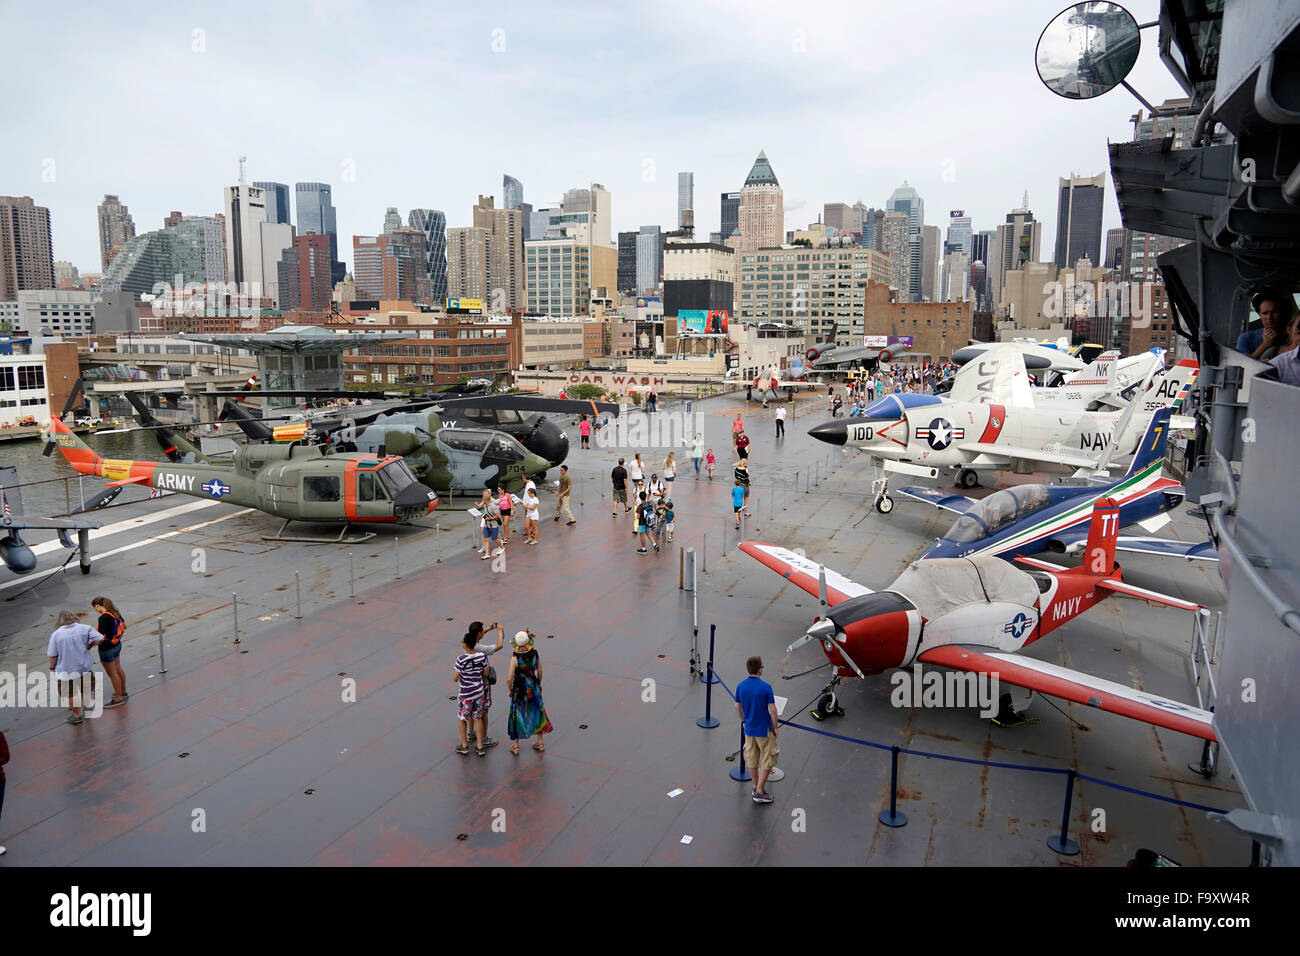 The flight deck of USS Intrepid aircraft carrier.Intrepid Sea, Air & Space Museum. Manhattan, New York City, USA Stock Photo